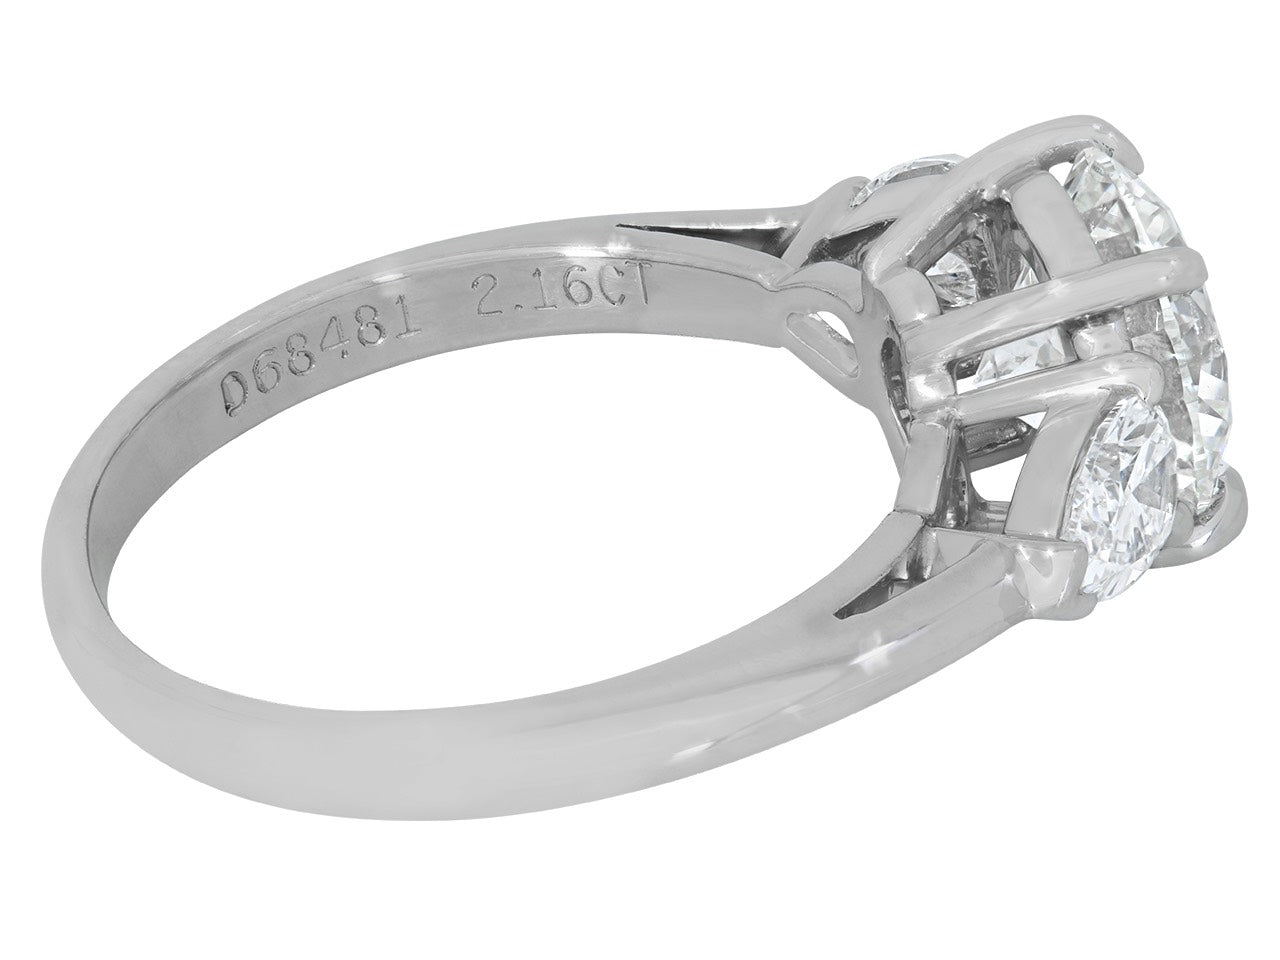 Tiffany & Co. Diamond Ring, 2.04 Carat E/VS1, in Platinum